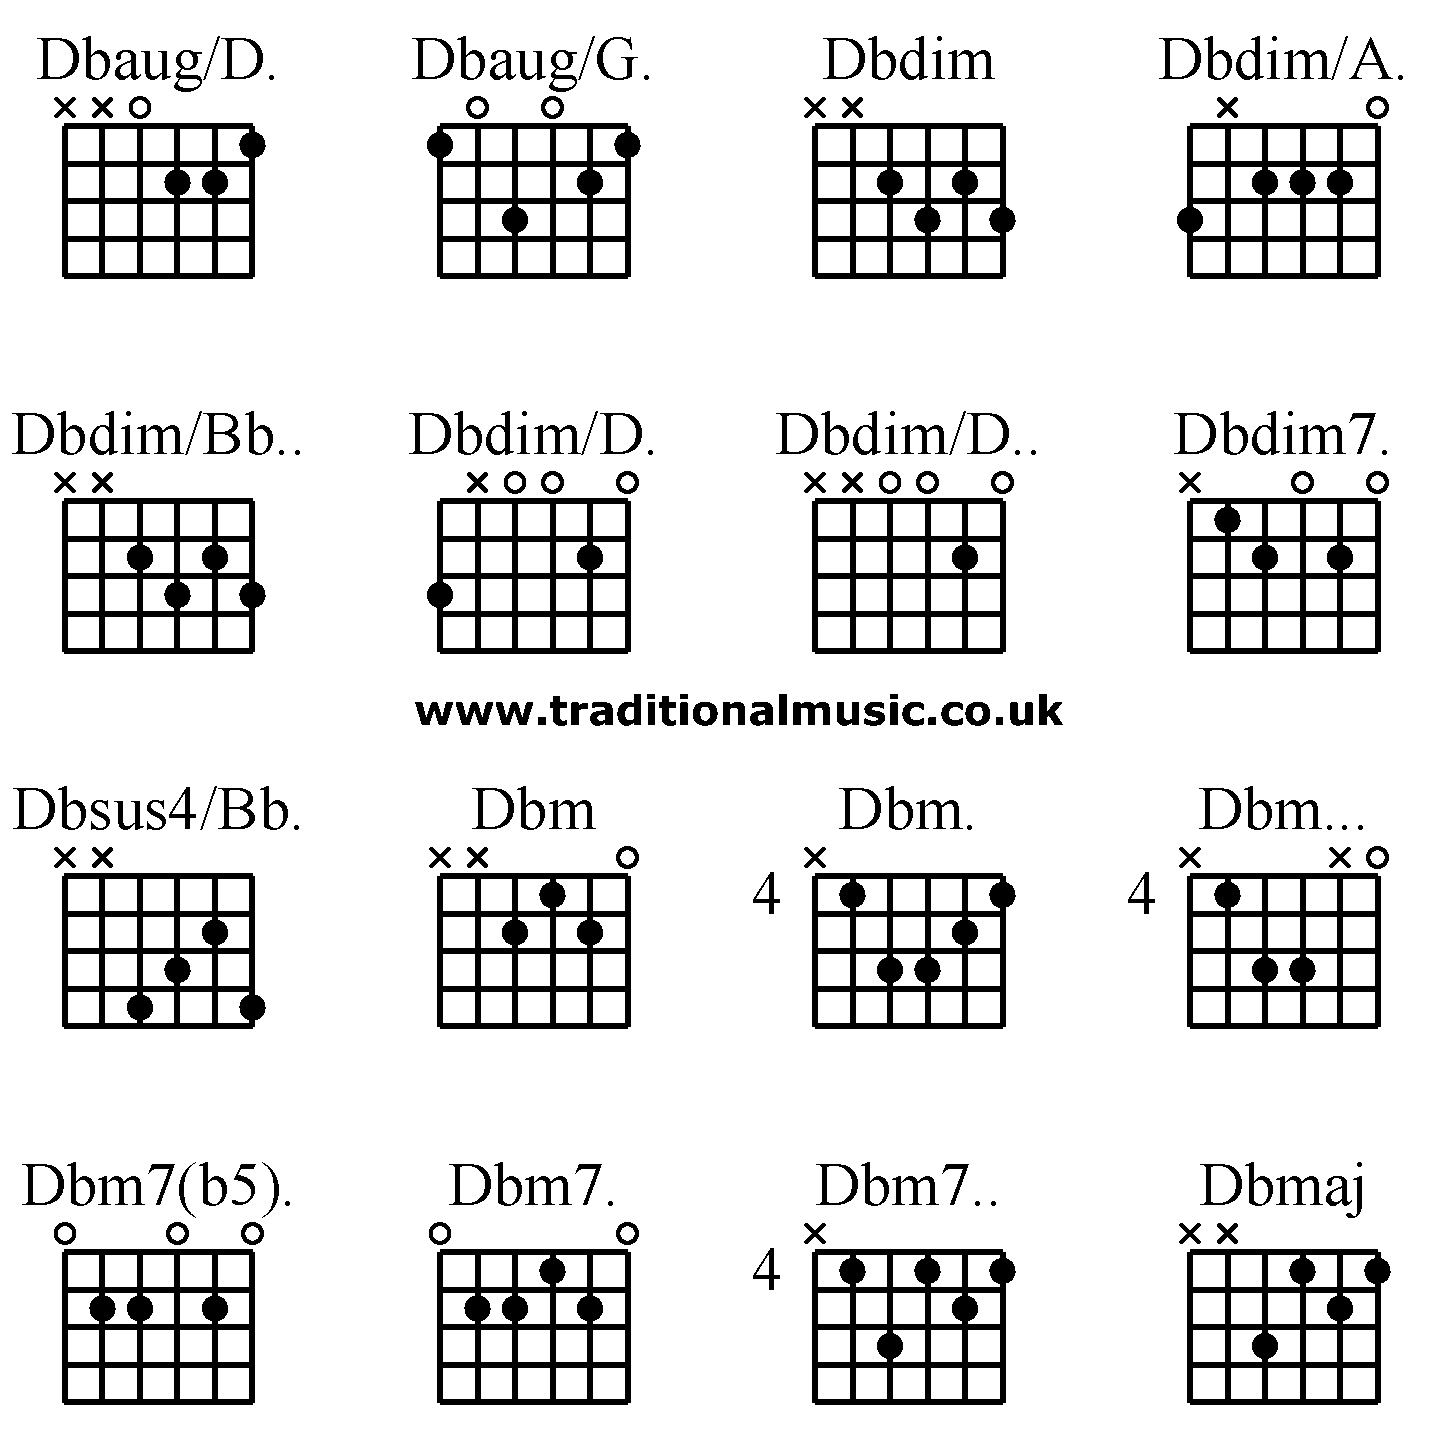 Advanced guitar chords:Dbaug/D. Dbaug/G. Dbdim Dbdim/A., Dbdim/Bb.. Dbdim/D. Dbdim/D.. Dbdim7., Dbsus4/Bb. Dbm Dbm. Dbm..., Dbm7(b5). Dbm7. Dbm7.. Dbmaj